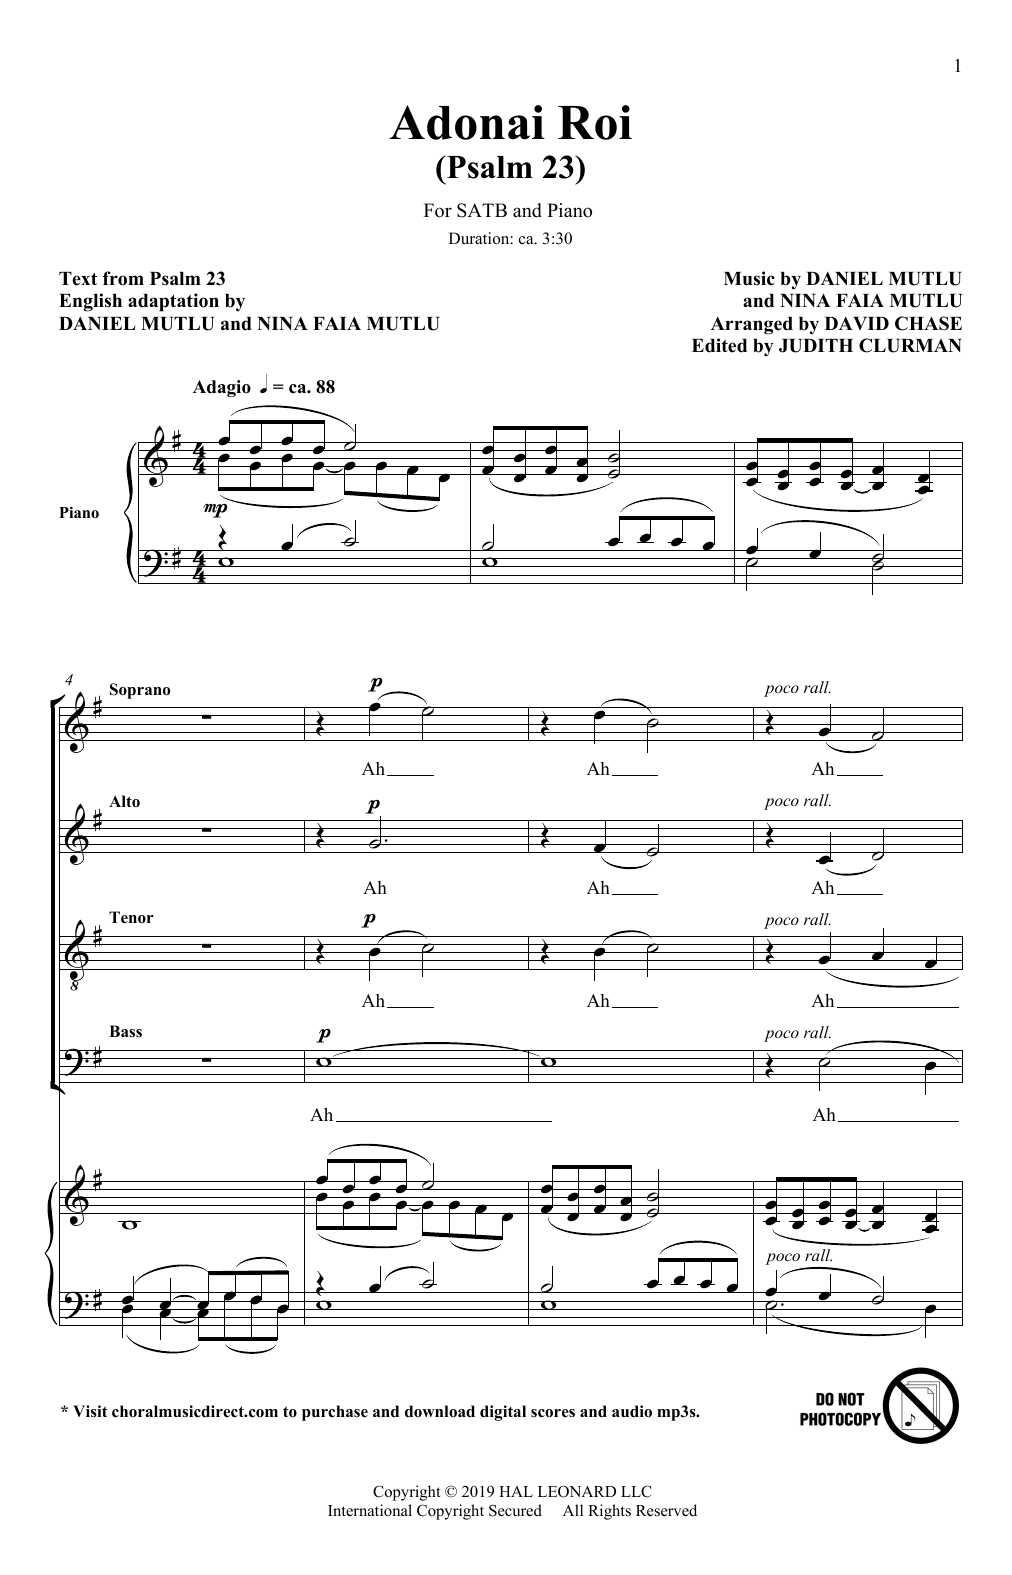 Nina Faia Mutlu and Daniel Mutlu Adonai Roi (Psalm 23) (Rejoice: Honoring the Jewish Spirit) (arr. David Chase) Sheet Music Notes & Chords for SATB Choir - Download or Print PDF